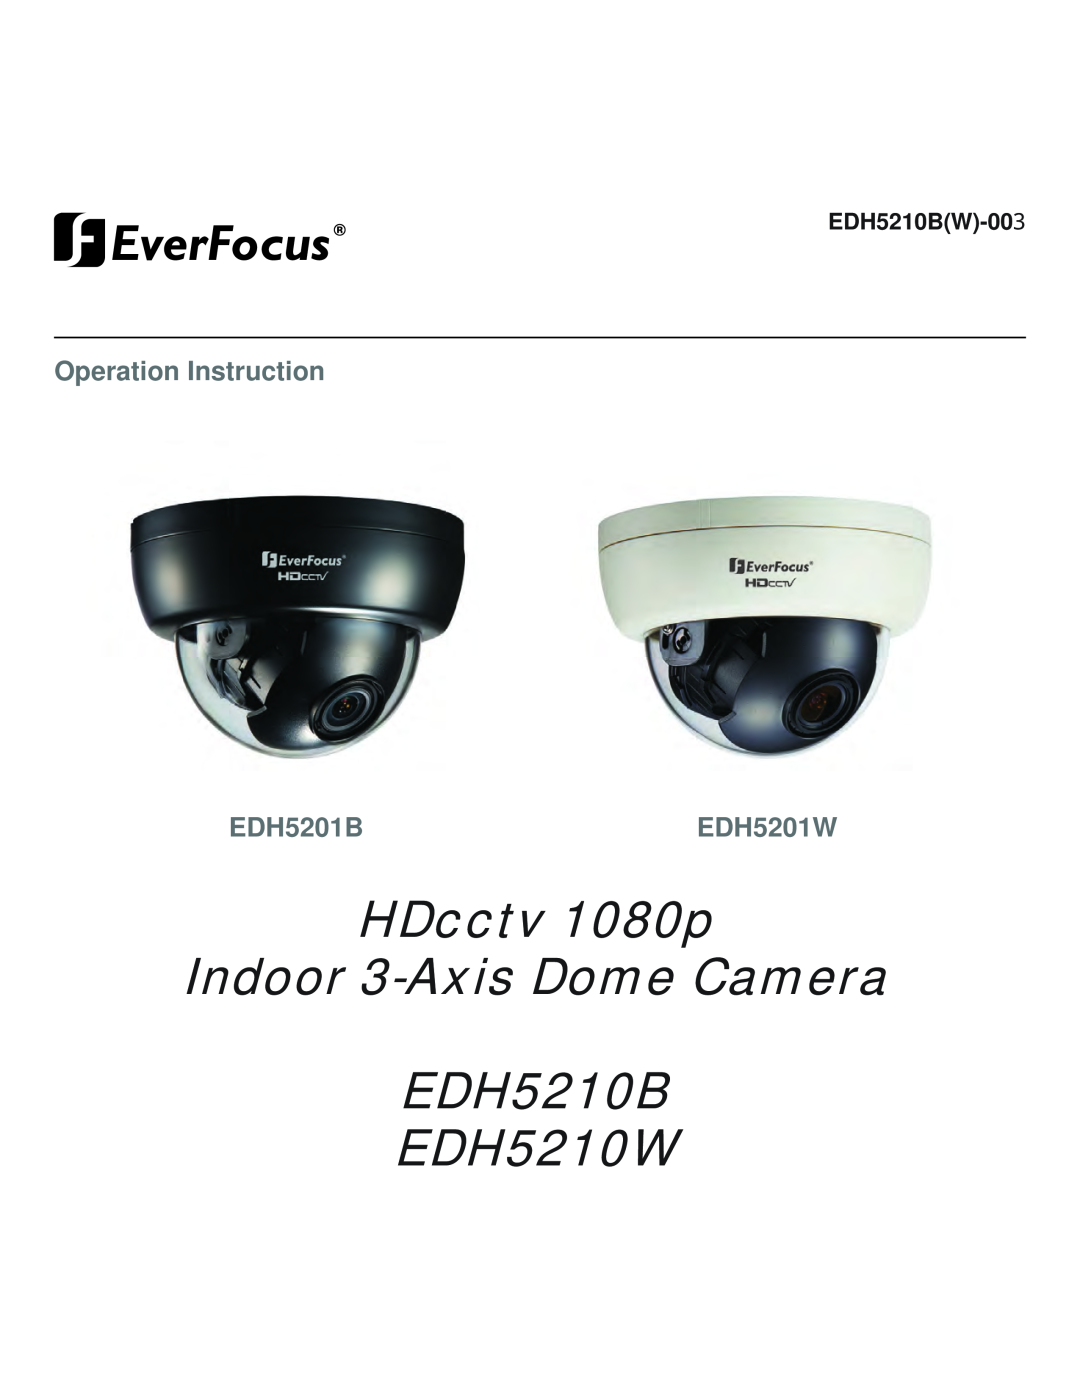 EverFocus manual HDcctv 1080p Indoor 3-AxisDome Camera, EDH5210B EDH5210W, Operation Instruction EDH5201BEDH5201W 